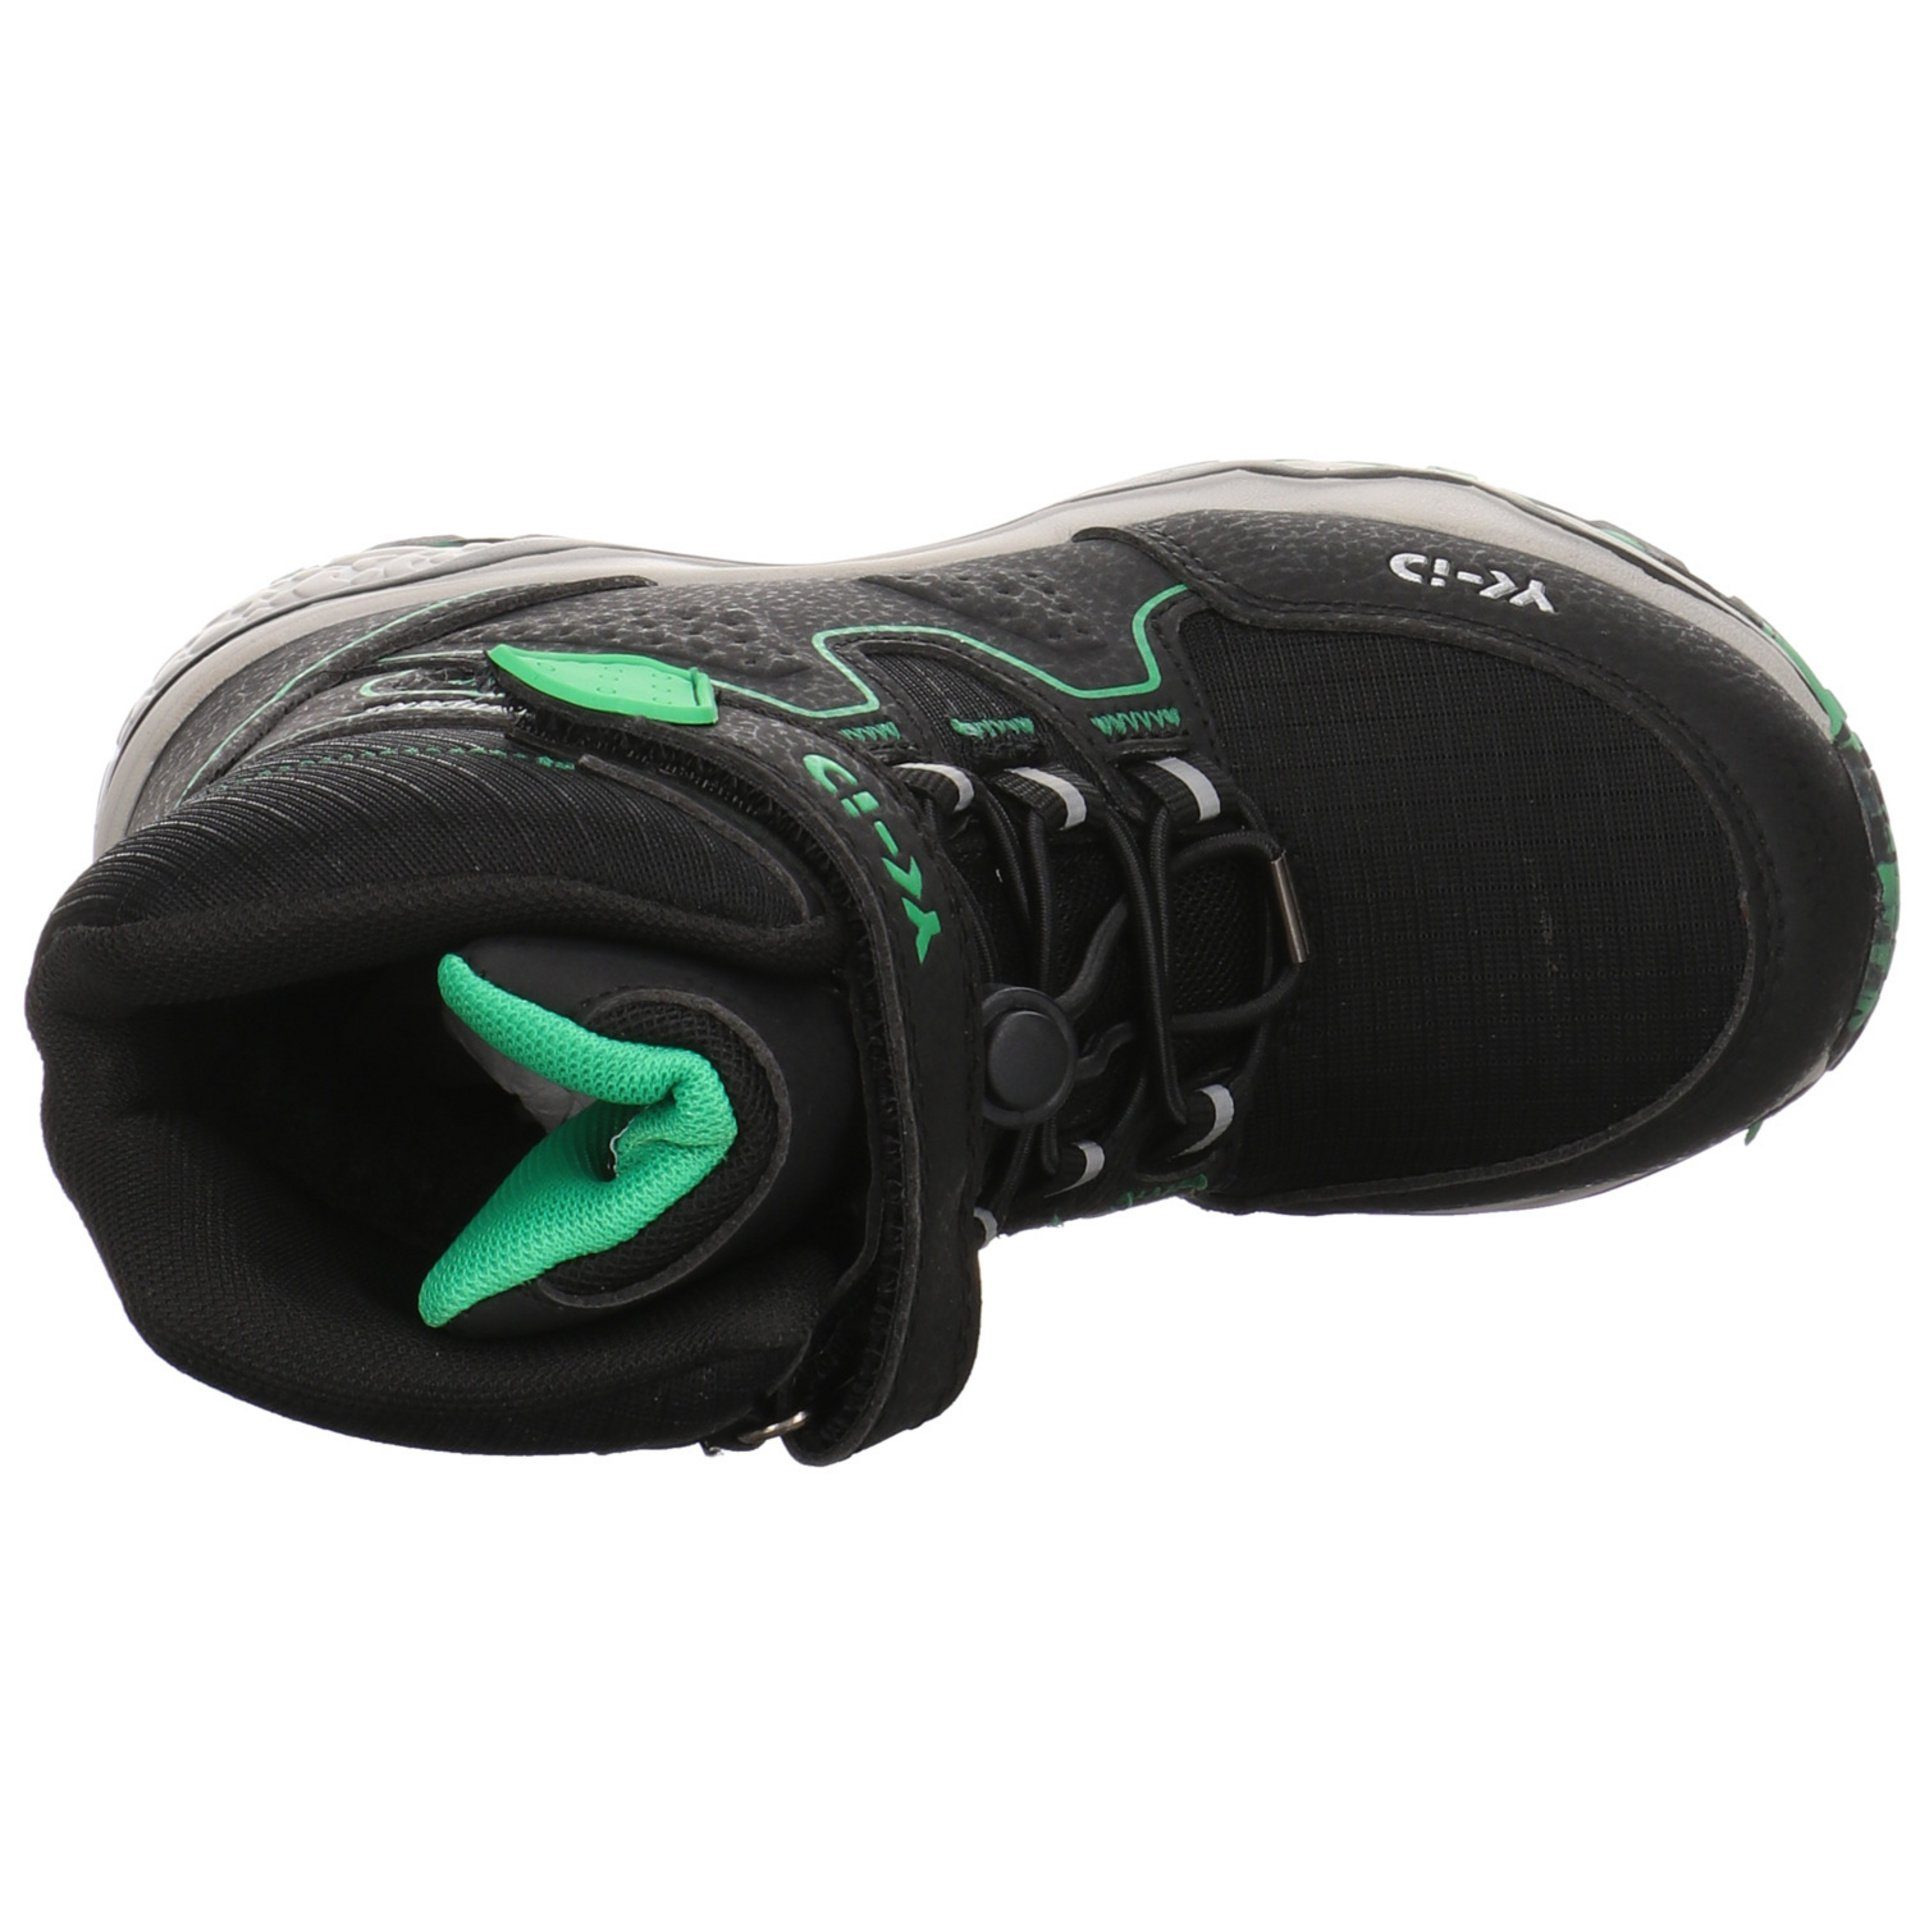 Salamander YK-ID by Lurchi Synthetikkombination Jungen Stiefel green black Lucian-Tex Schuhe Boots Stiefel